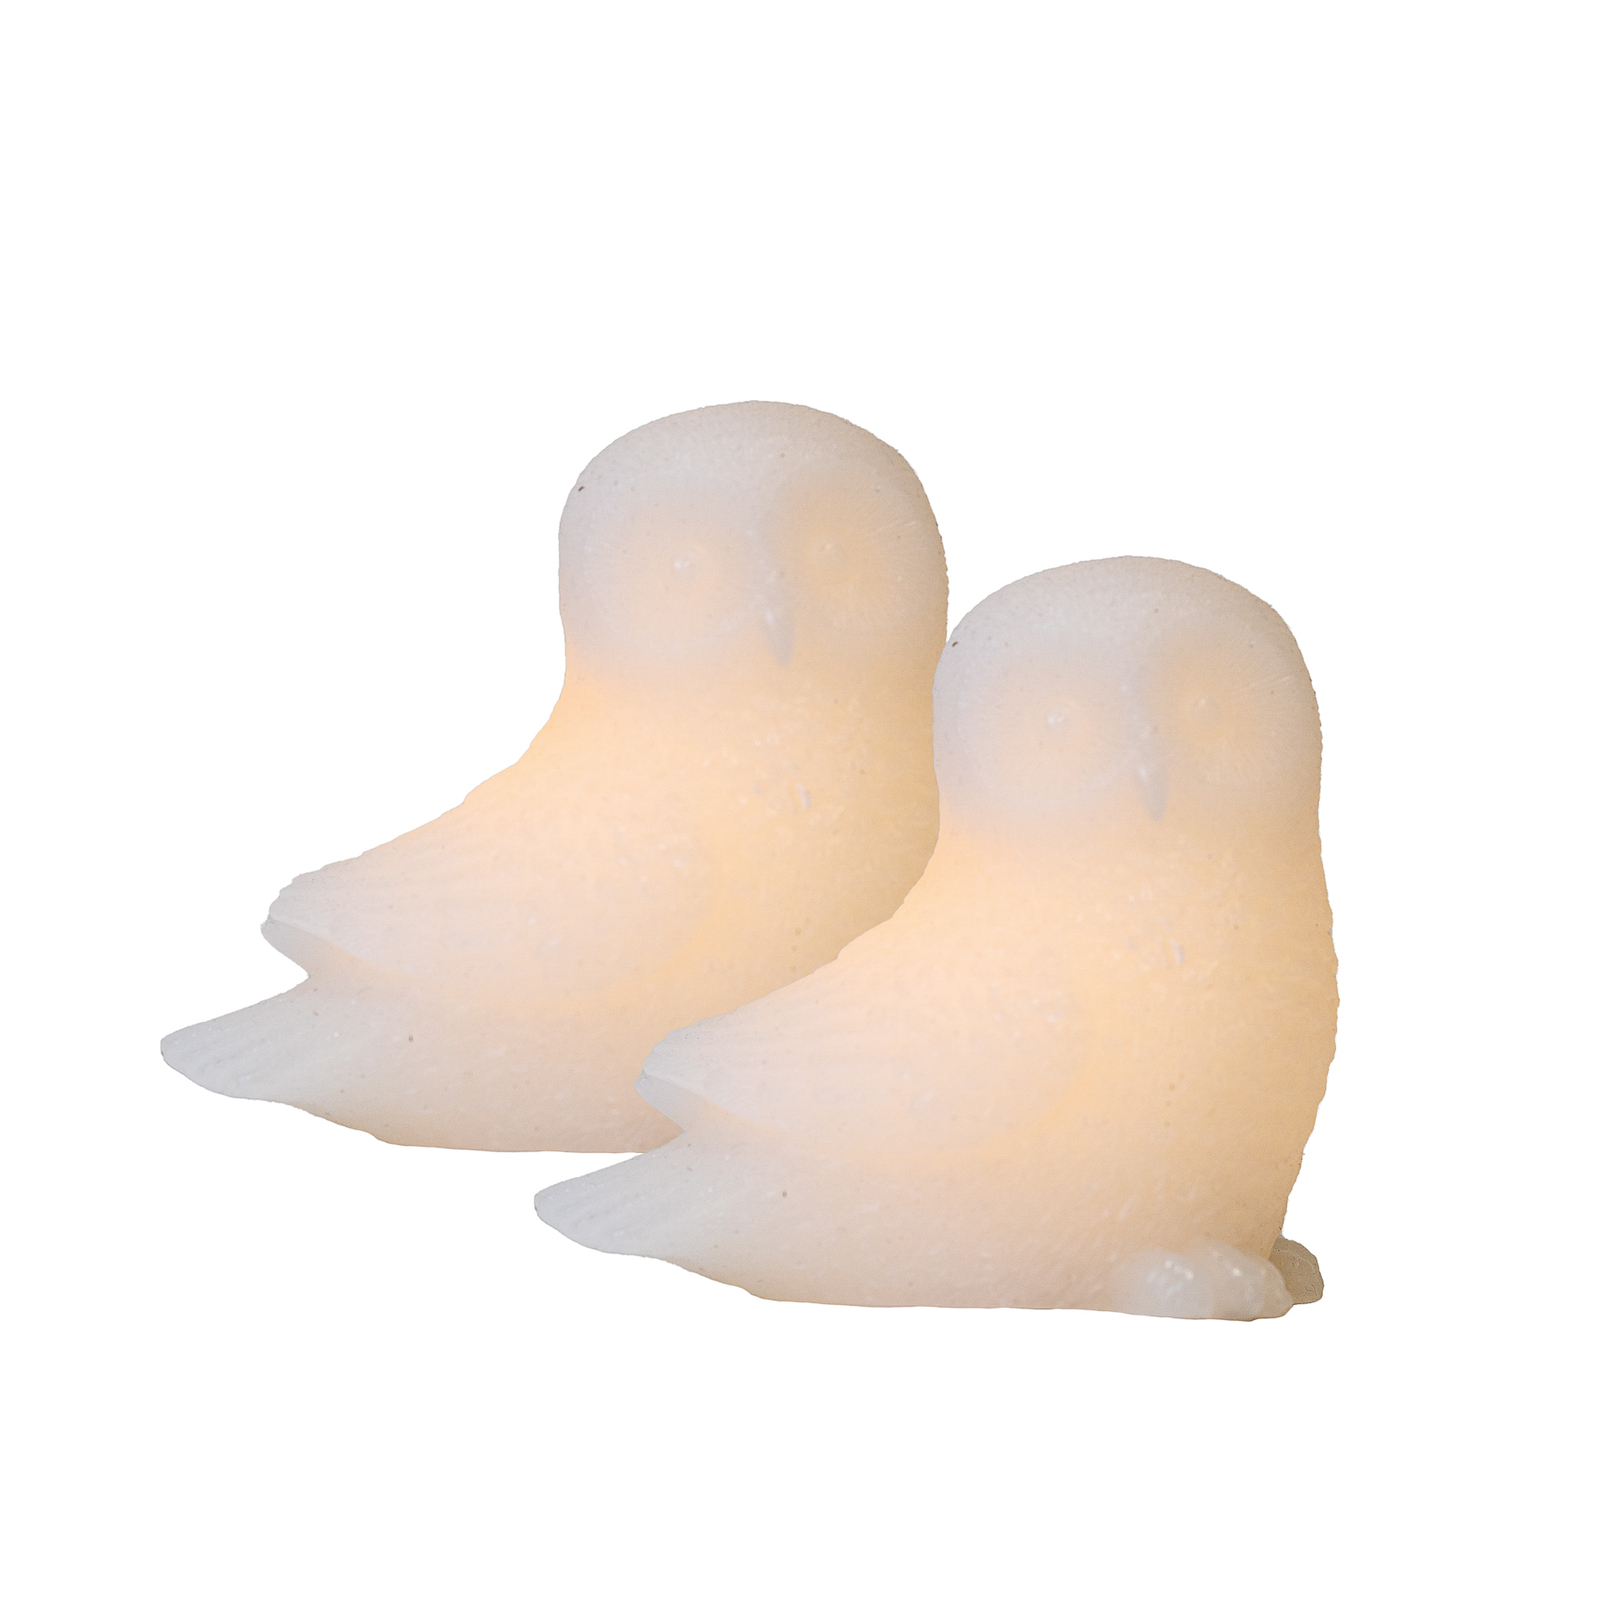 Ellen Owl LED decorative light made of wax, set of 2